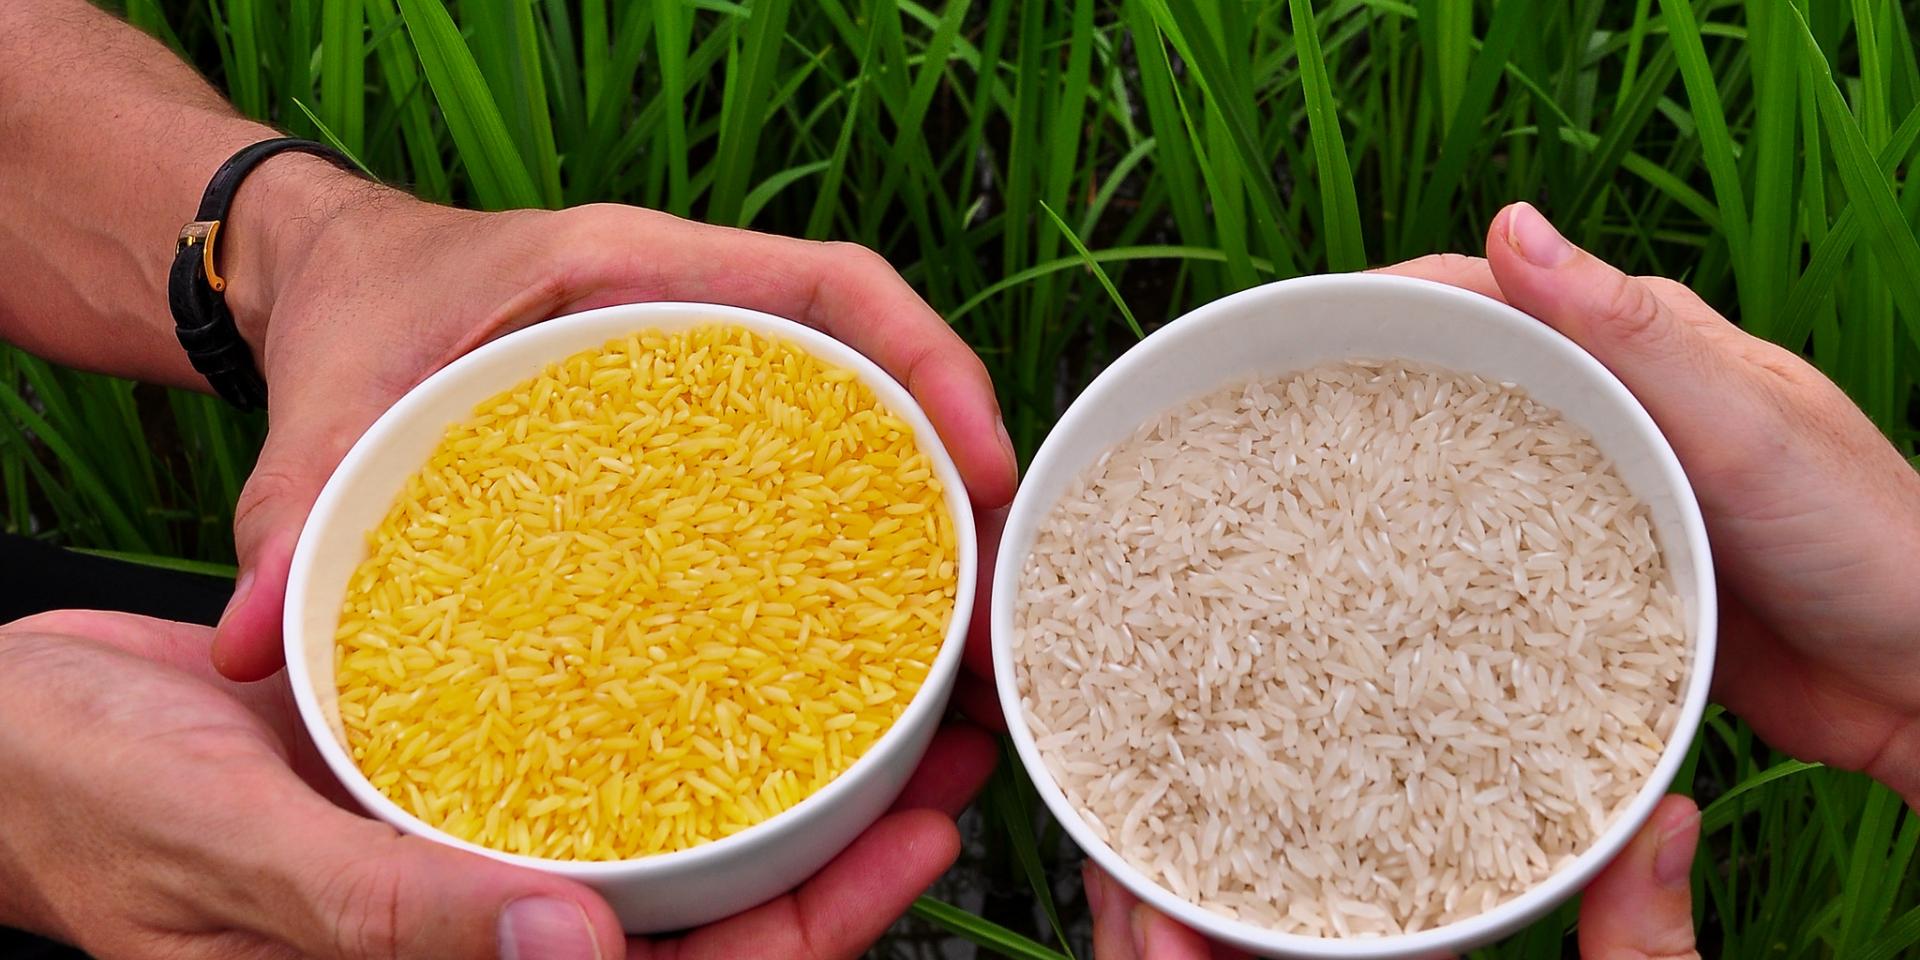 Golden Rice grain compared to white rice.